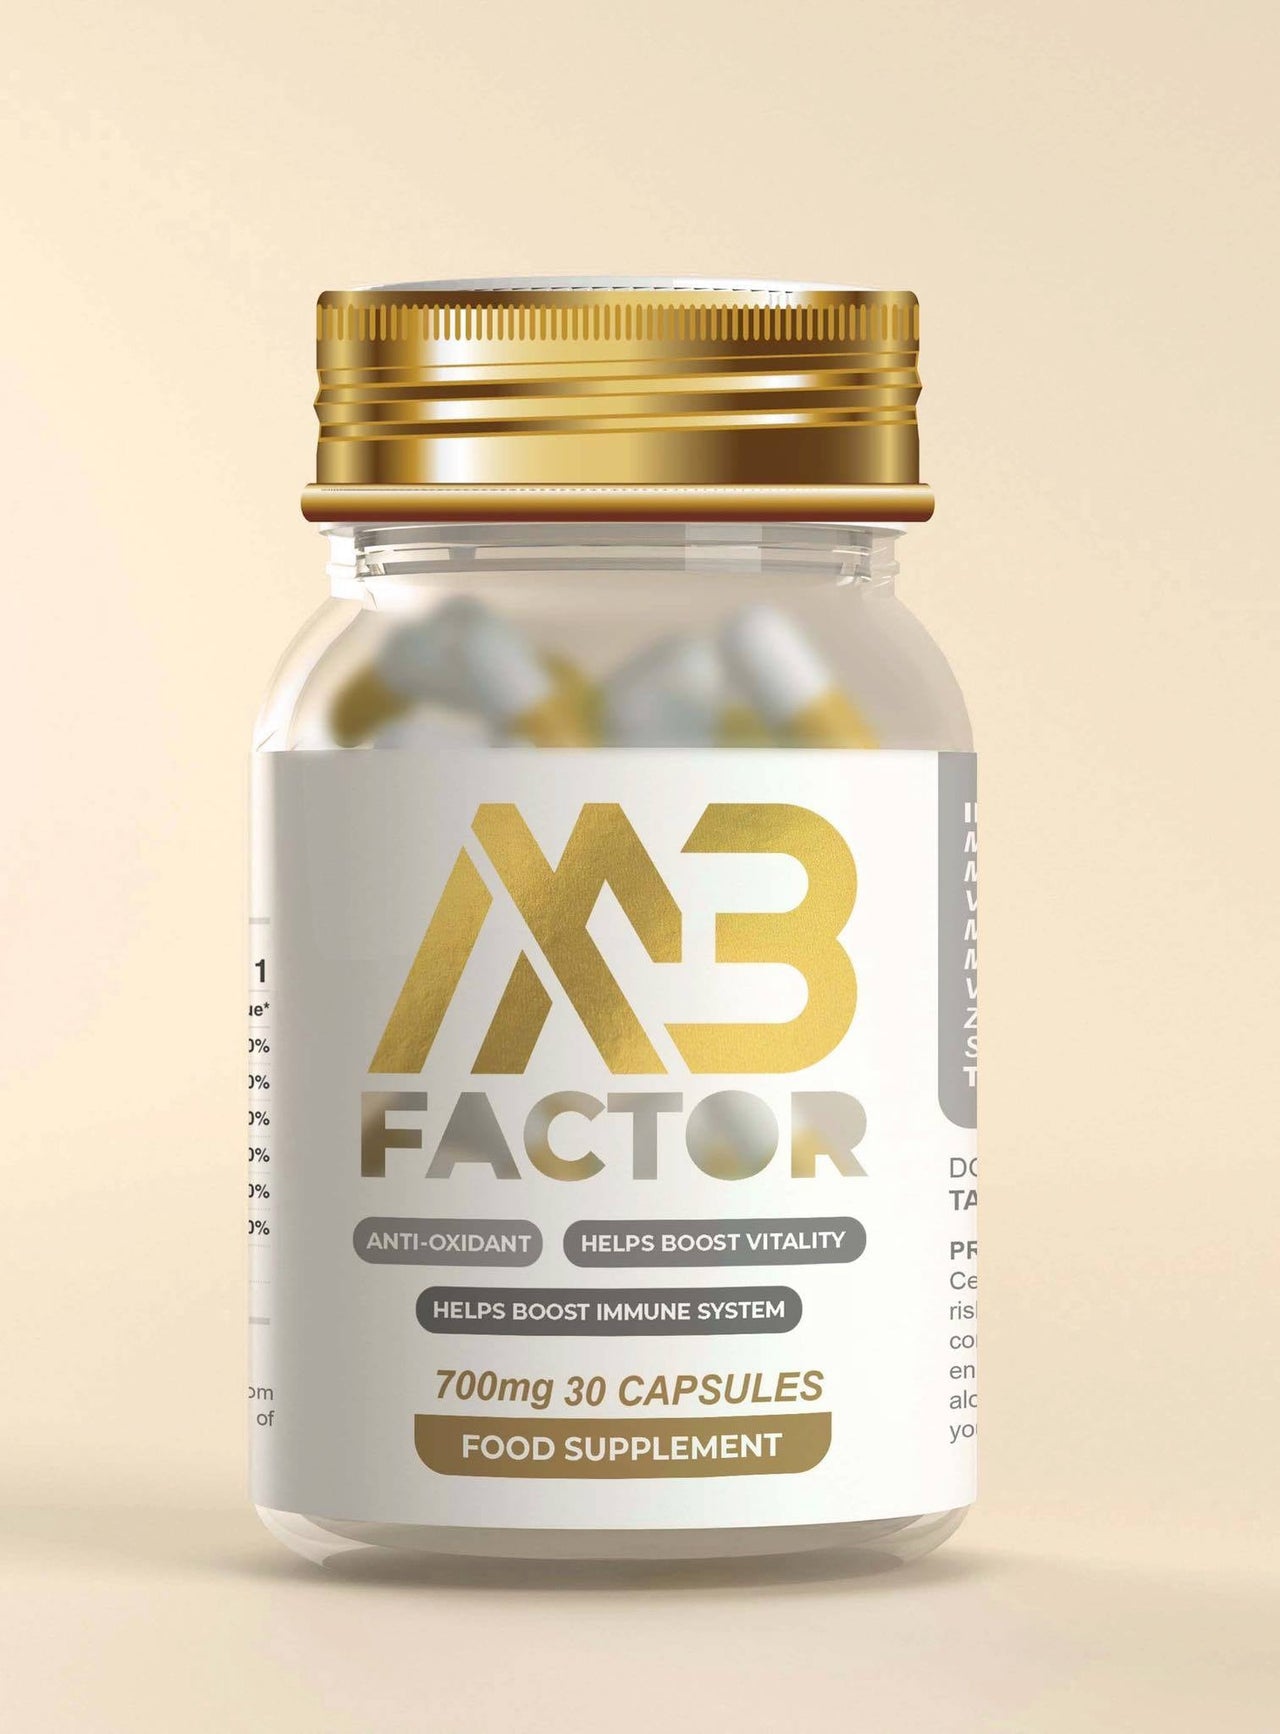 Fulgent M3 Factor | Antioxidant, Anti-inflammatory, Immune Booster (30 Capsules)